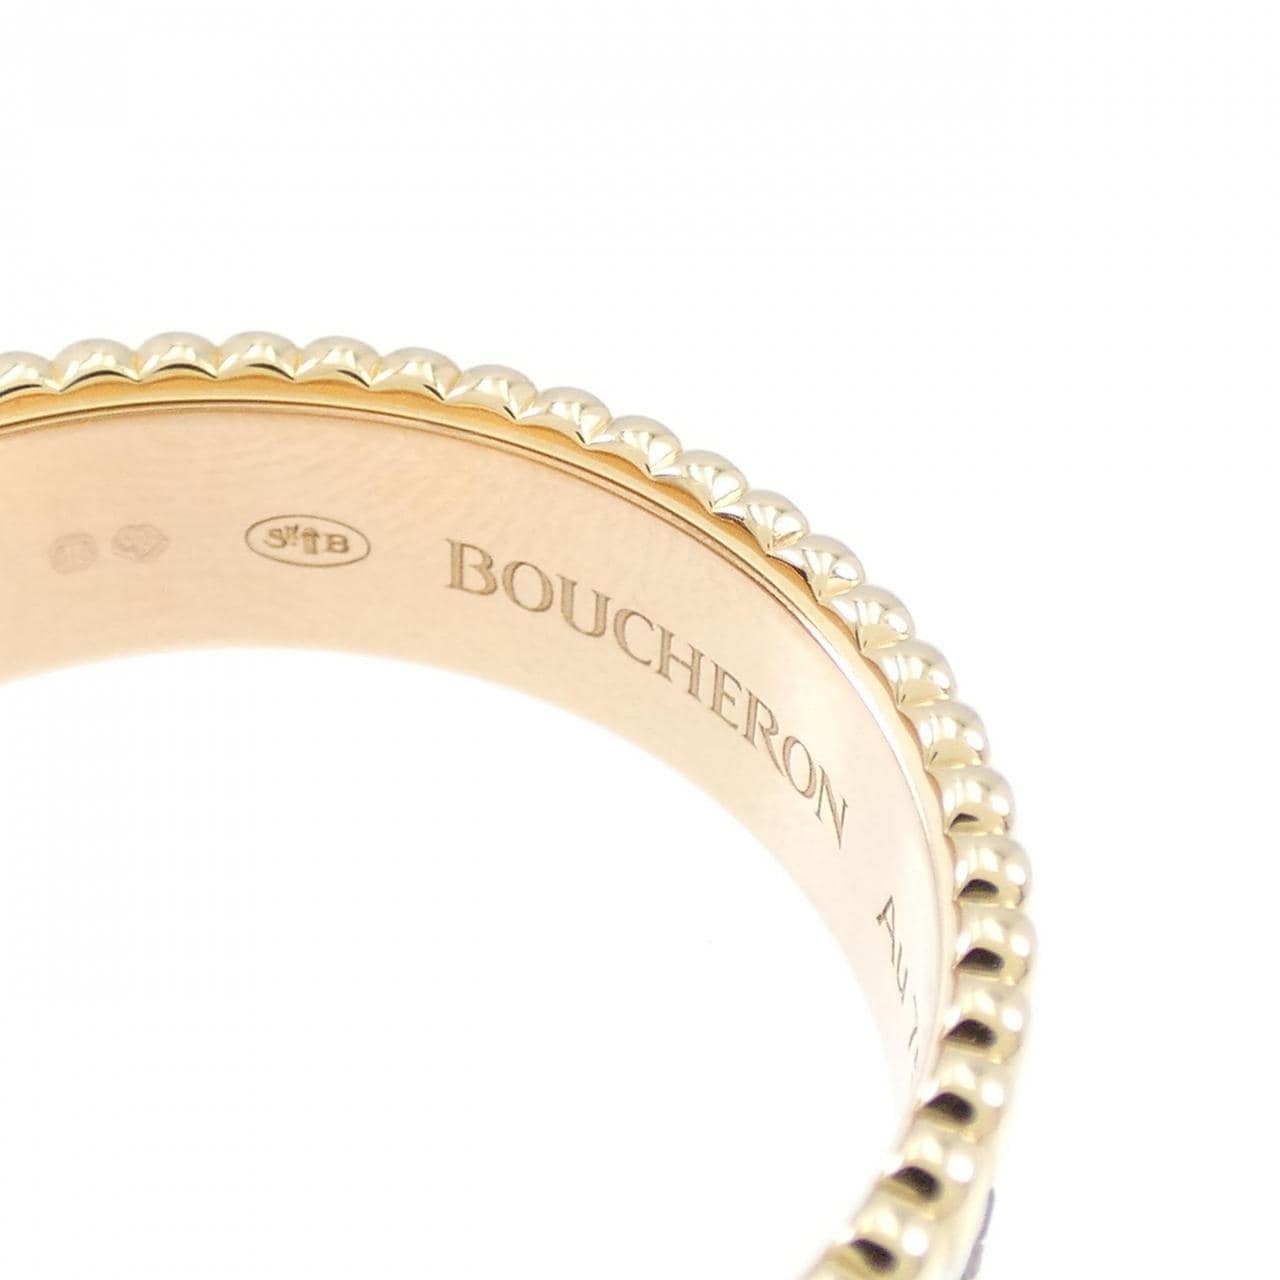 Boucheron Quatre Small Ring